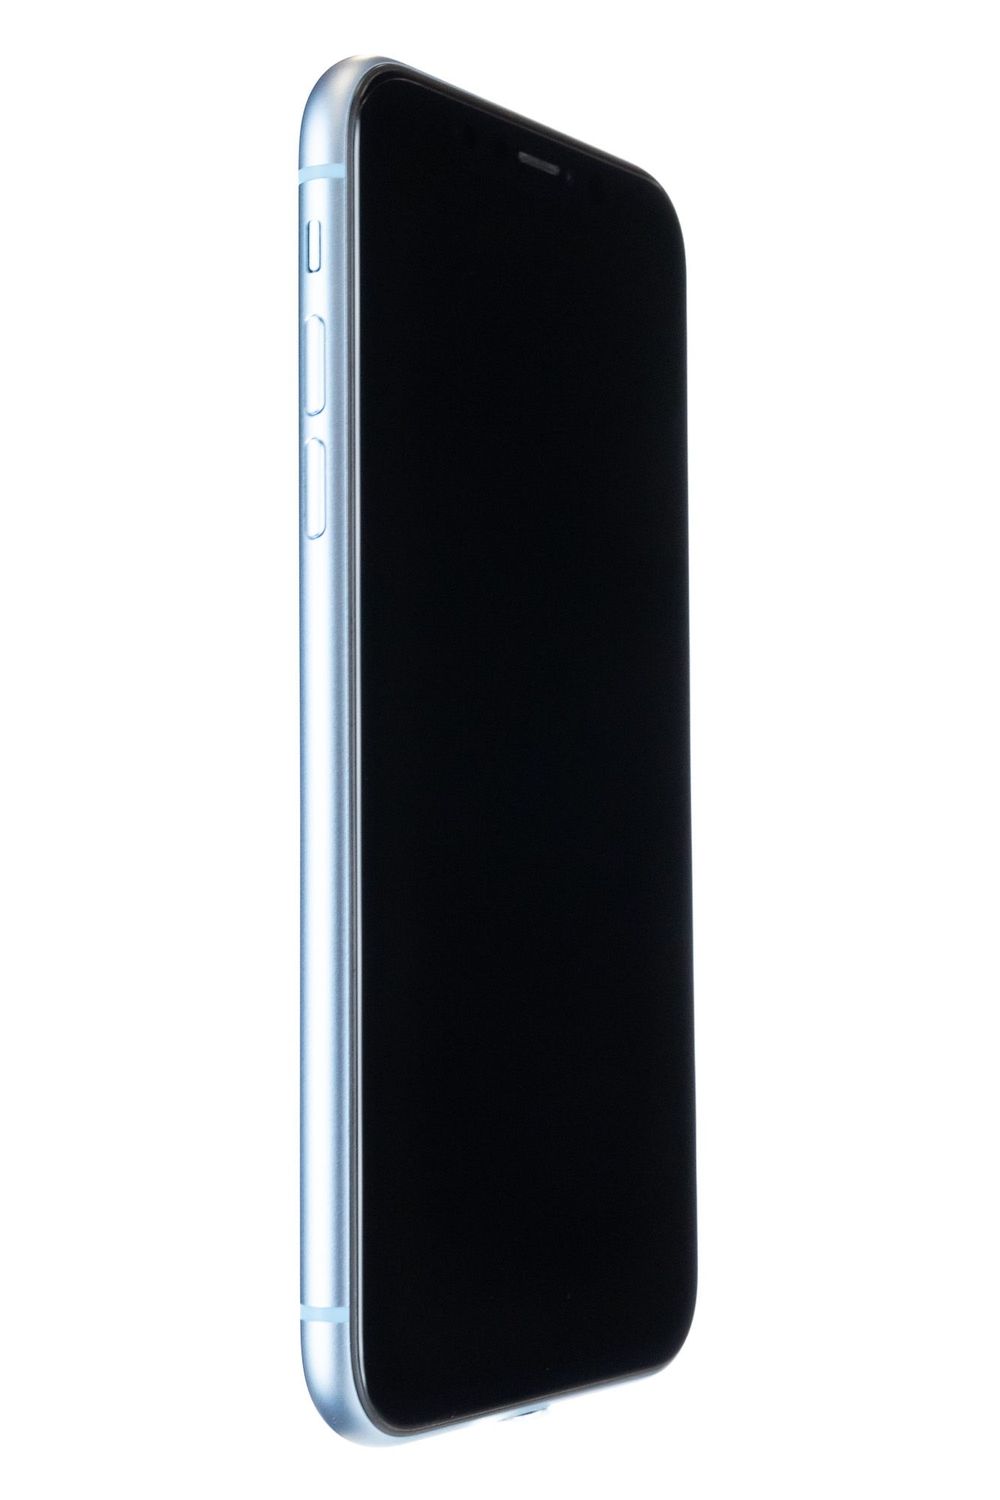 Mobiltelefon Apple iPhone XR, Blue, 64 GB, Bun